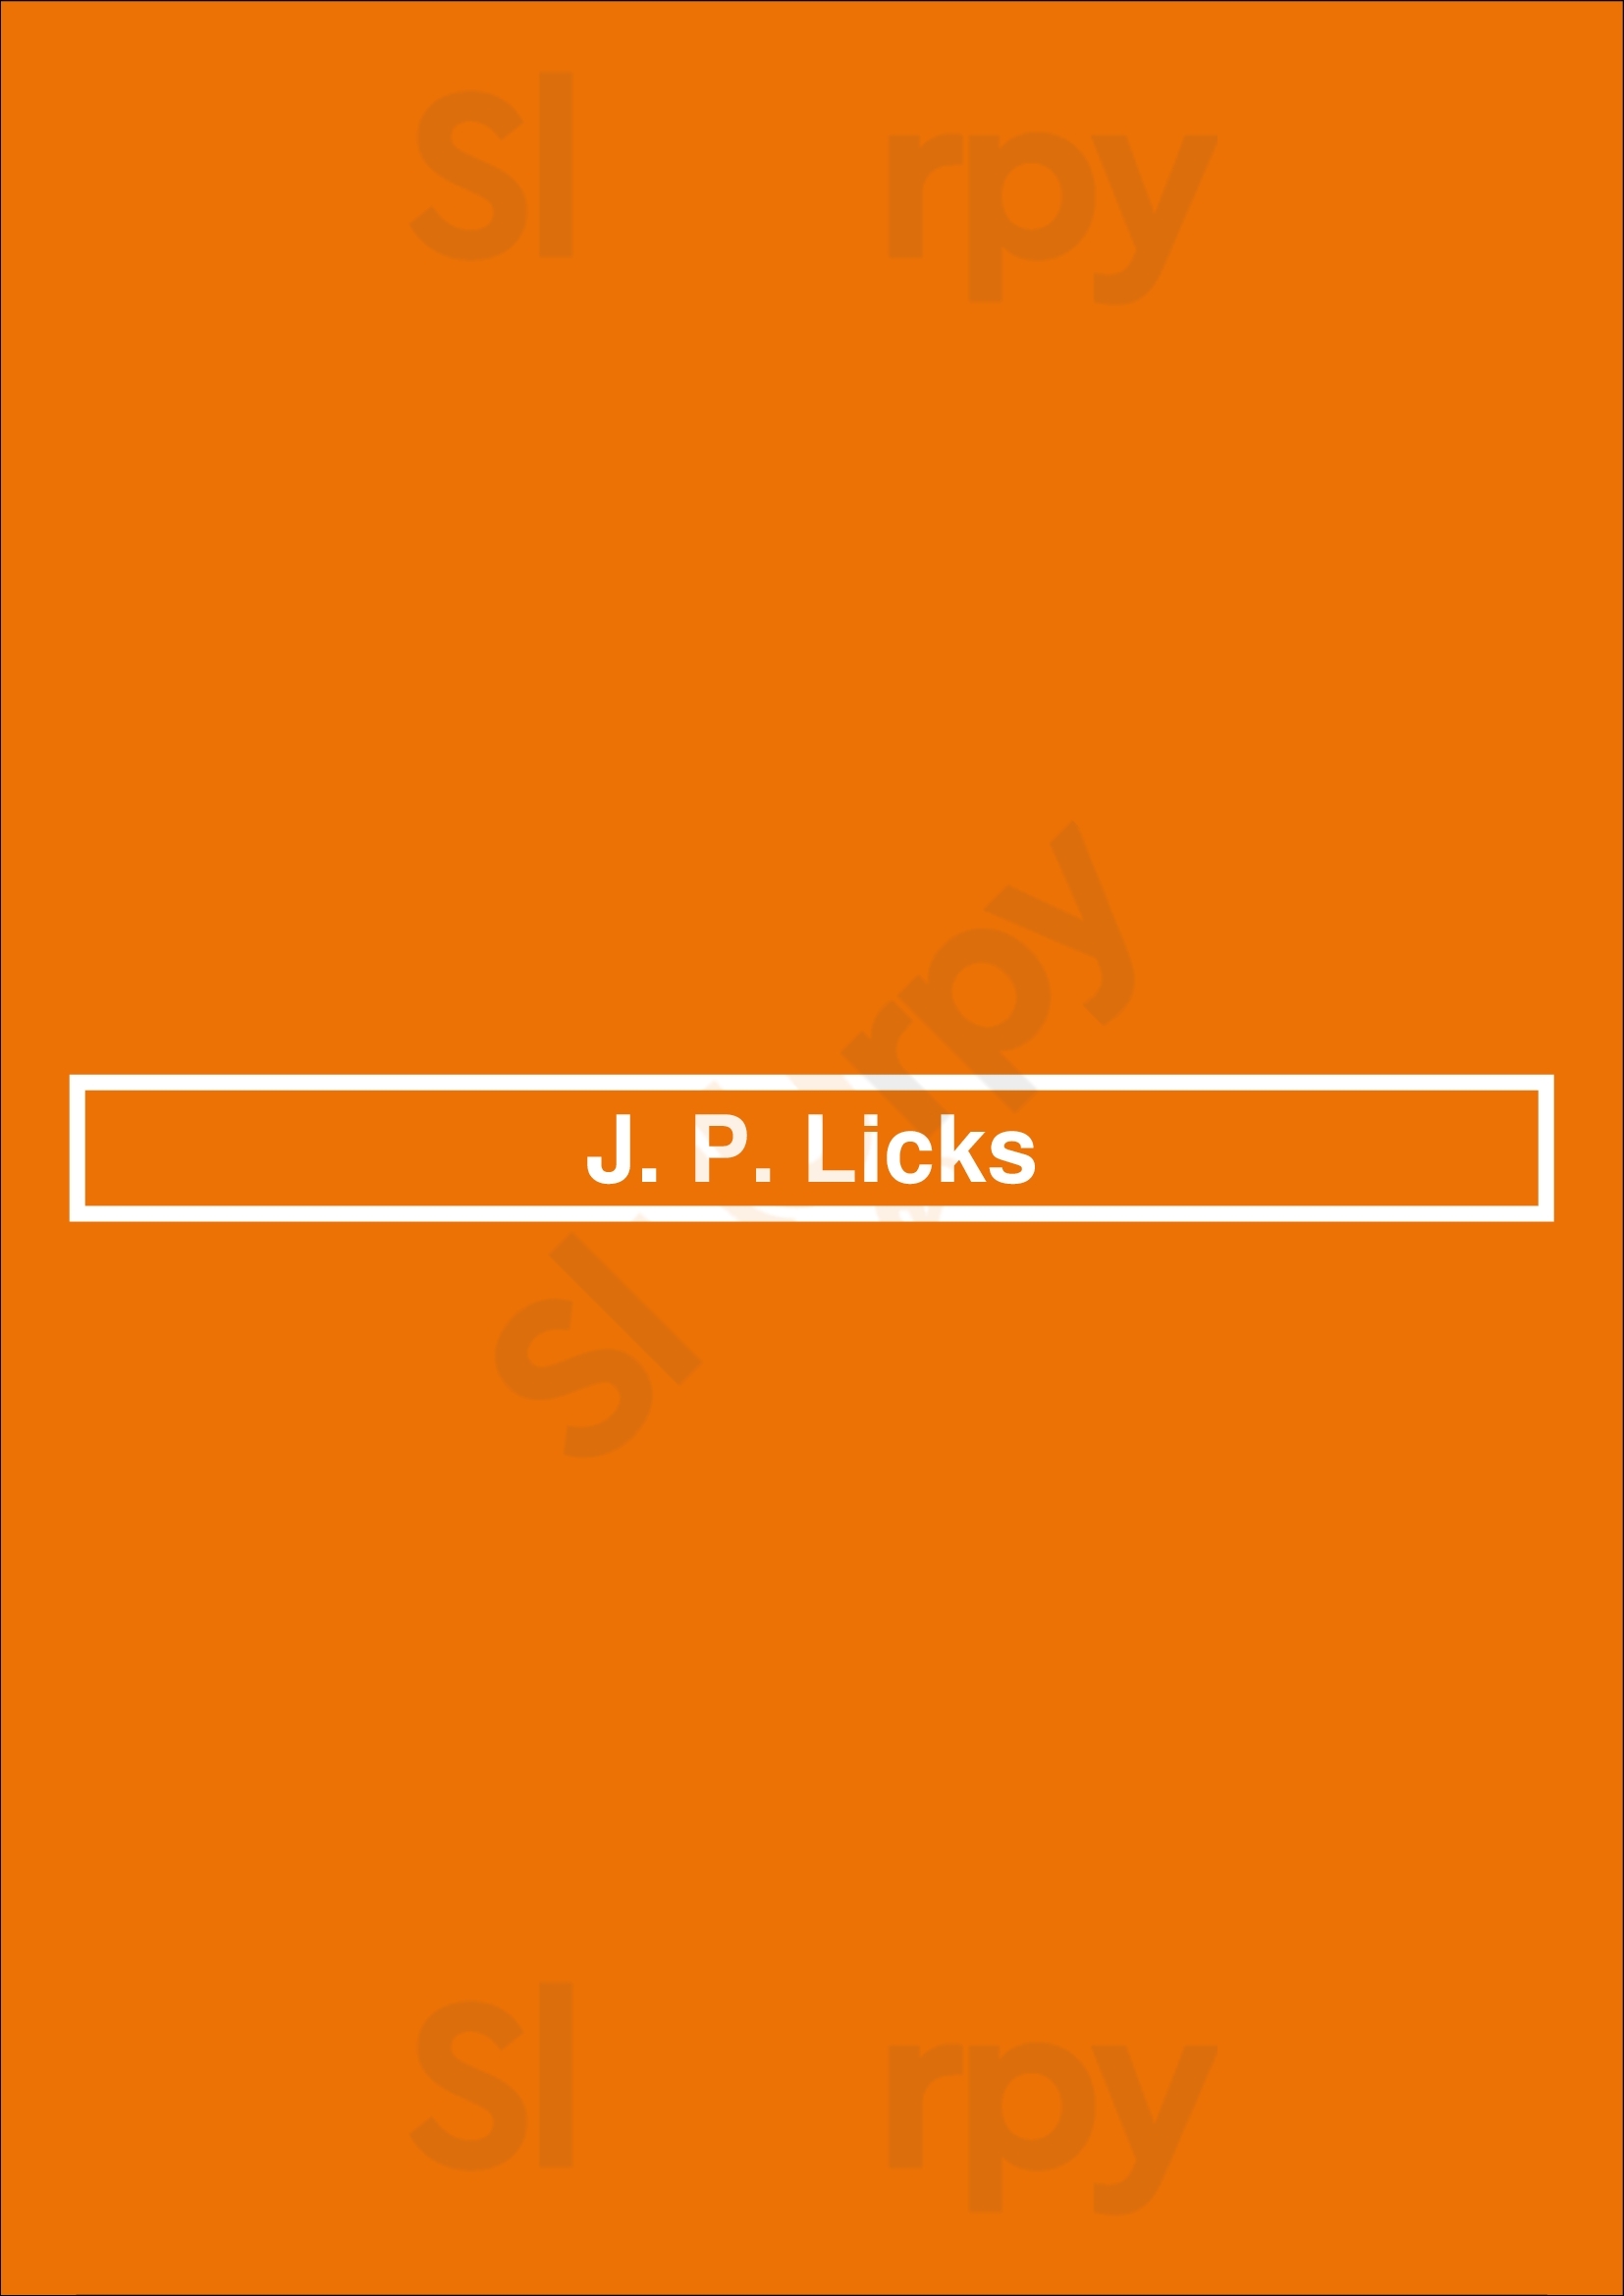 J.p. Licks Boston Menu - 1